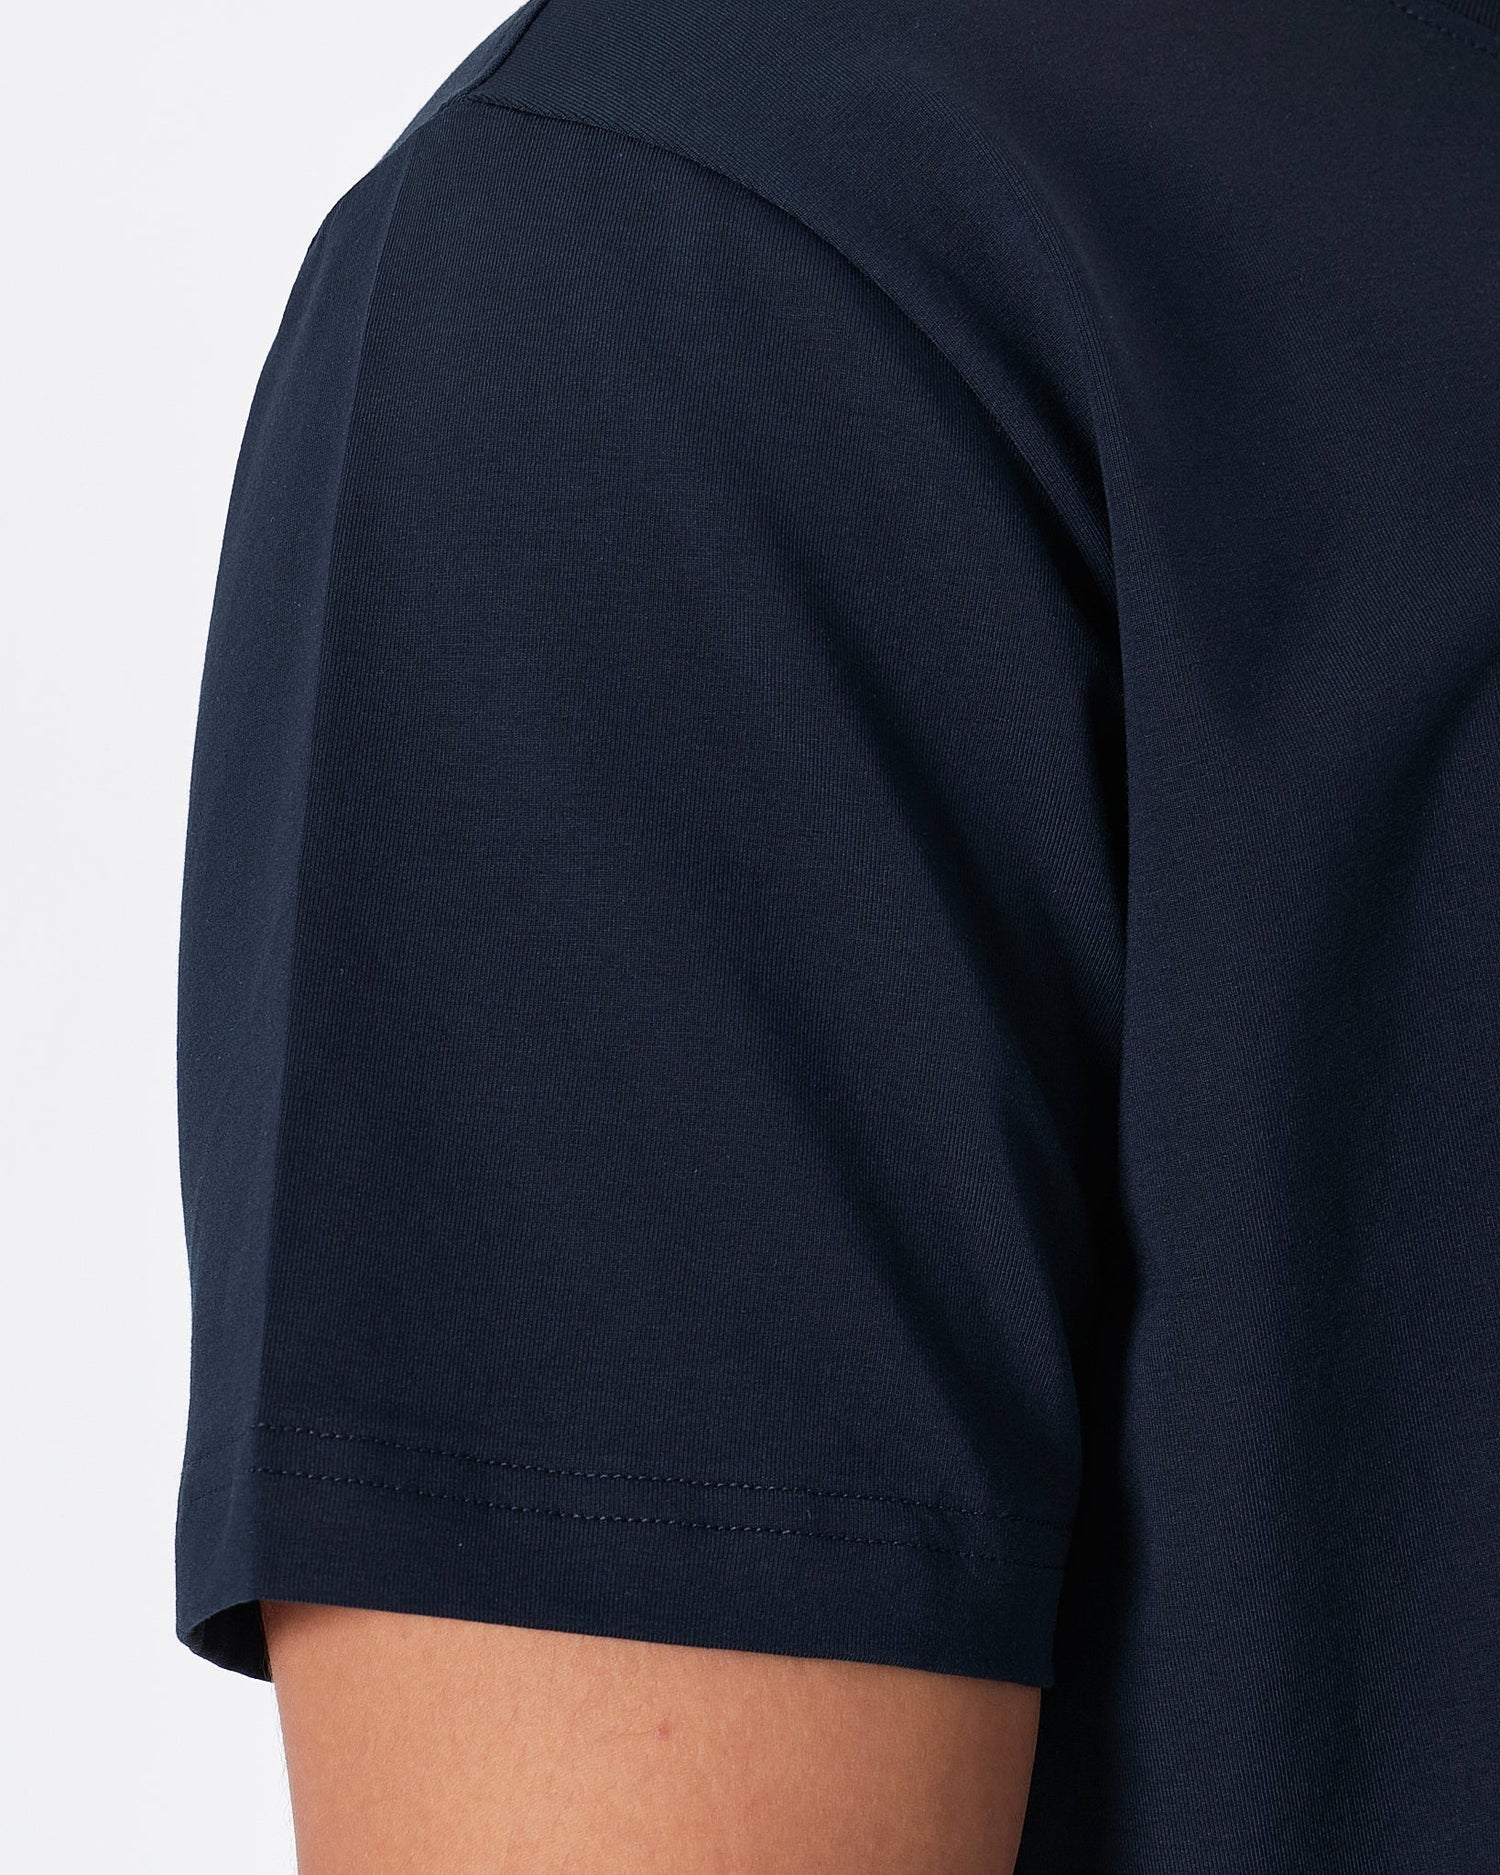 MOI OUTFIT-LAC Plain Men Dark Blue T-Shirt 15.90